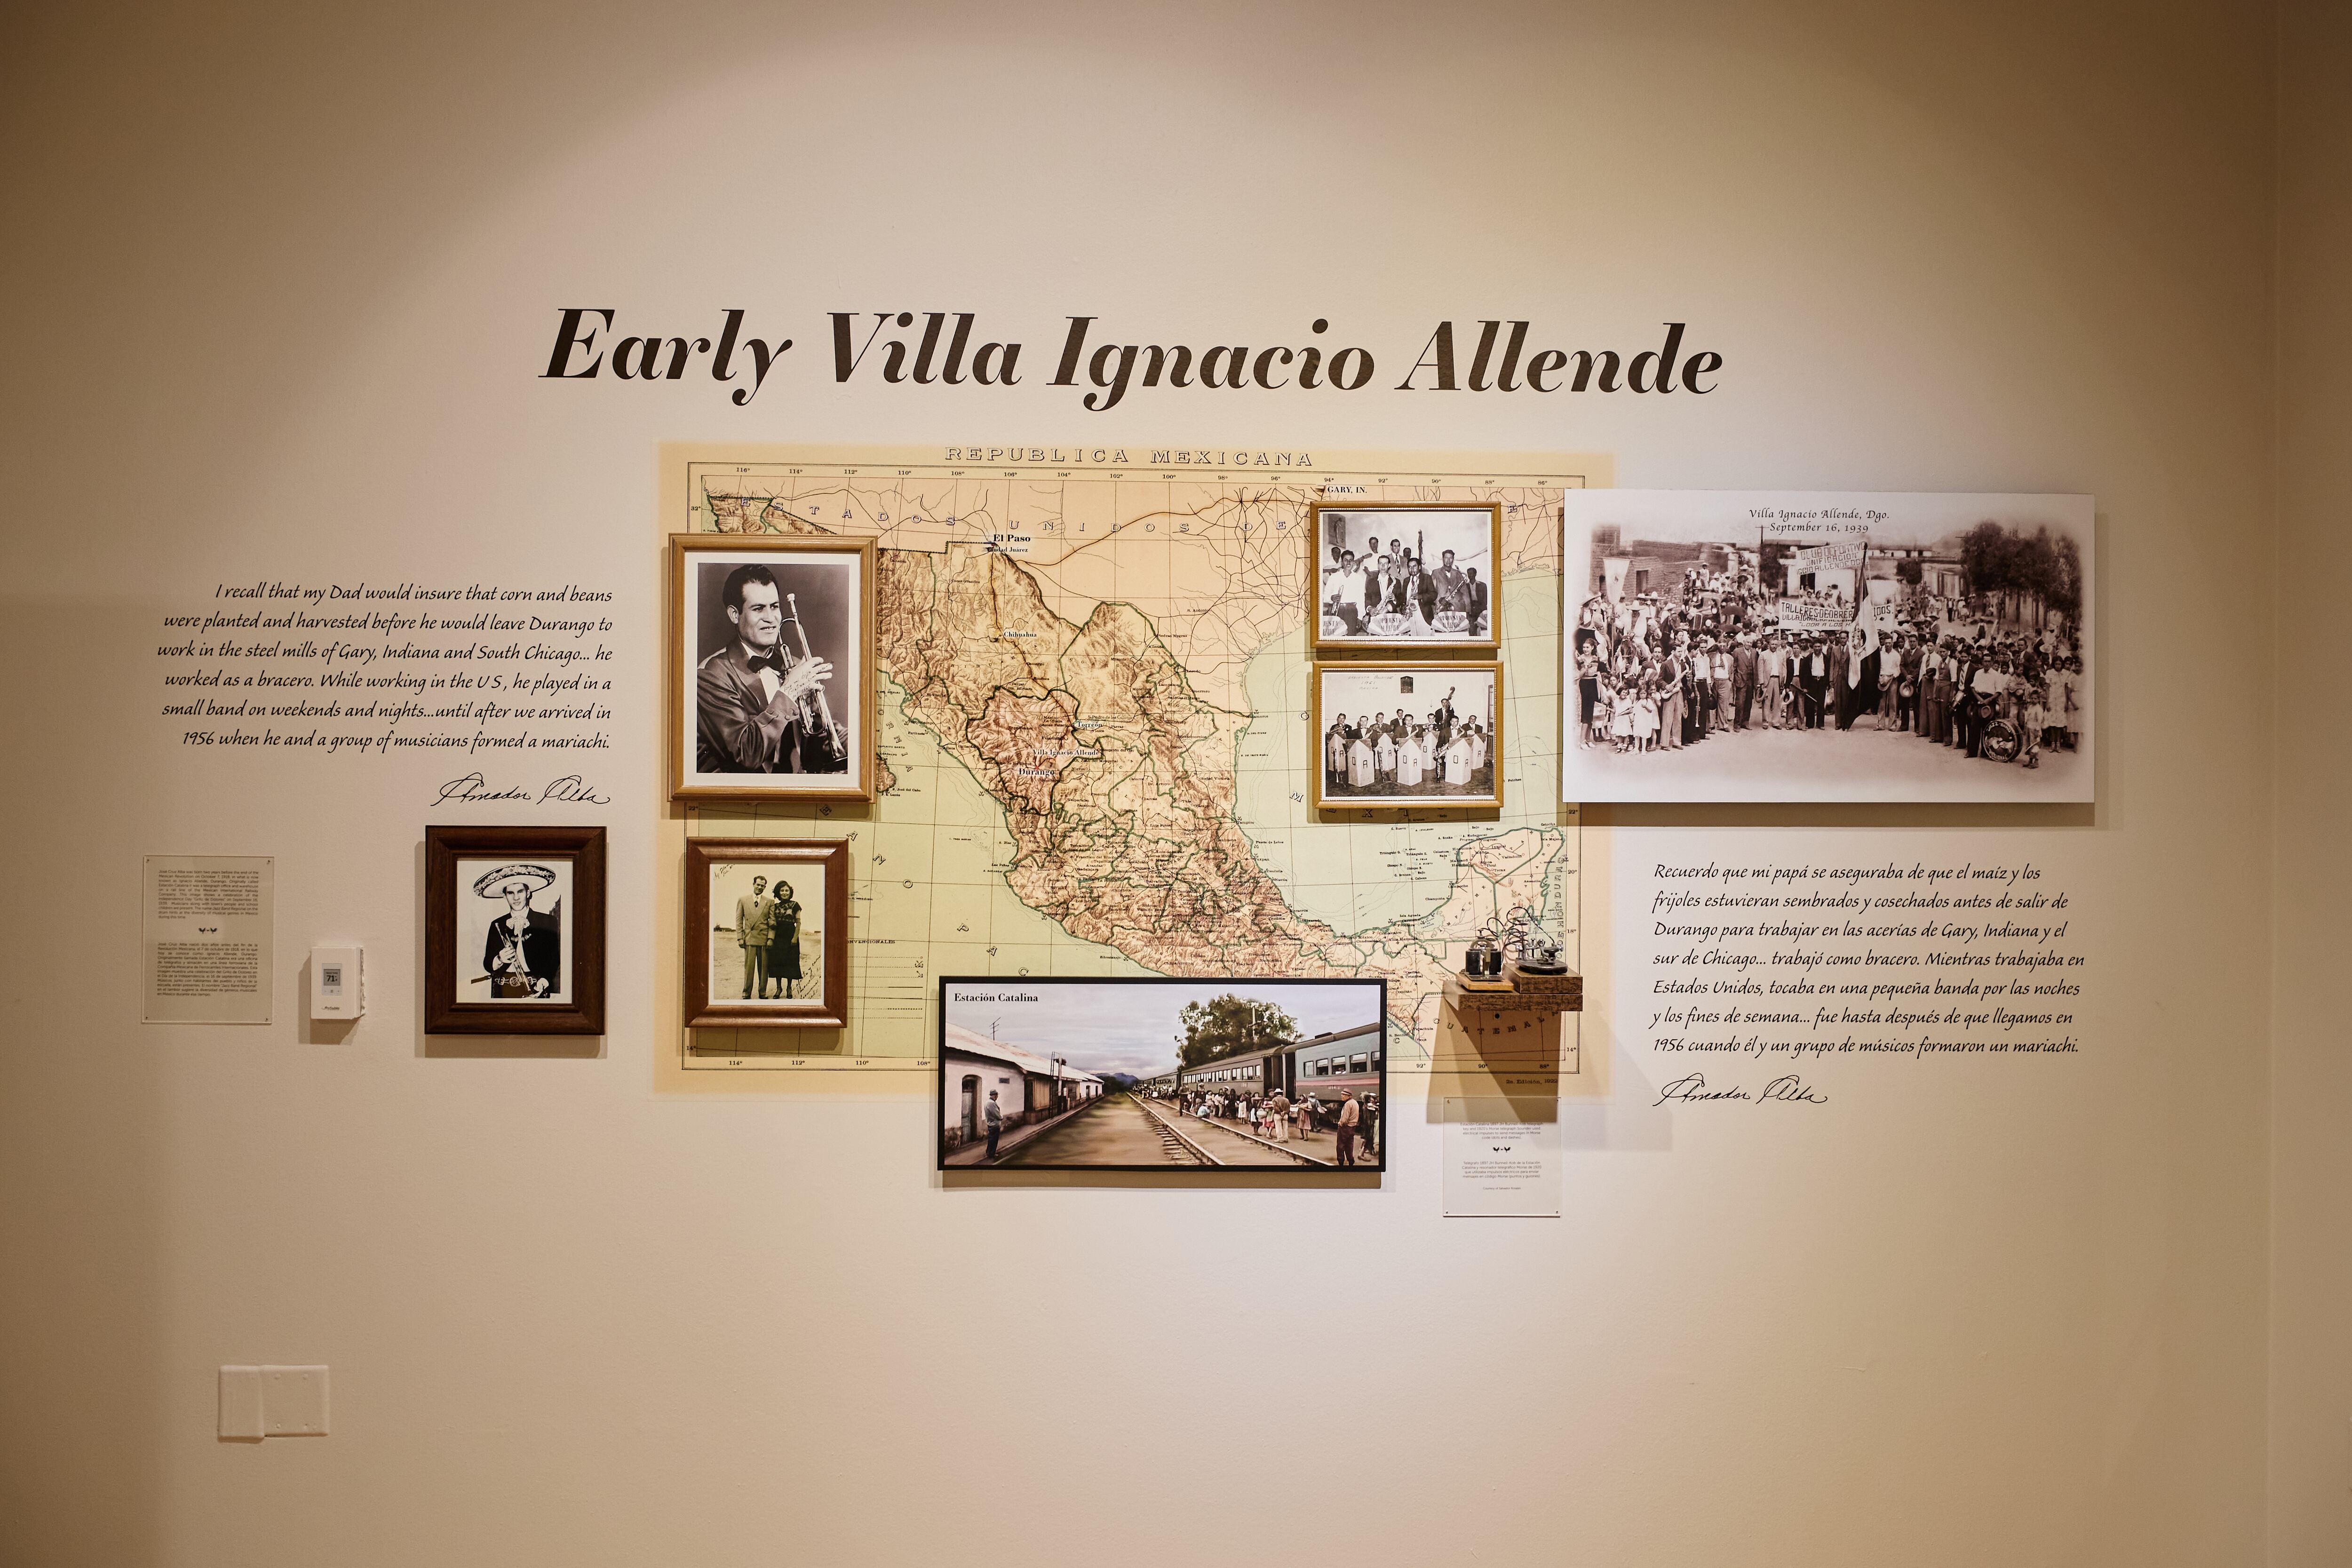 A photographic exhibition on the Early Villa Ignacio Allende.